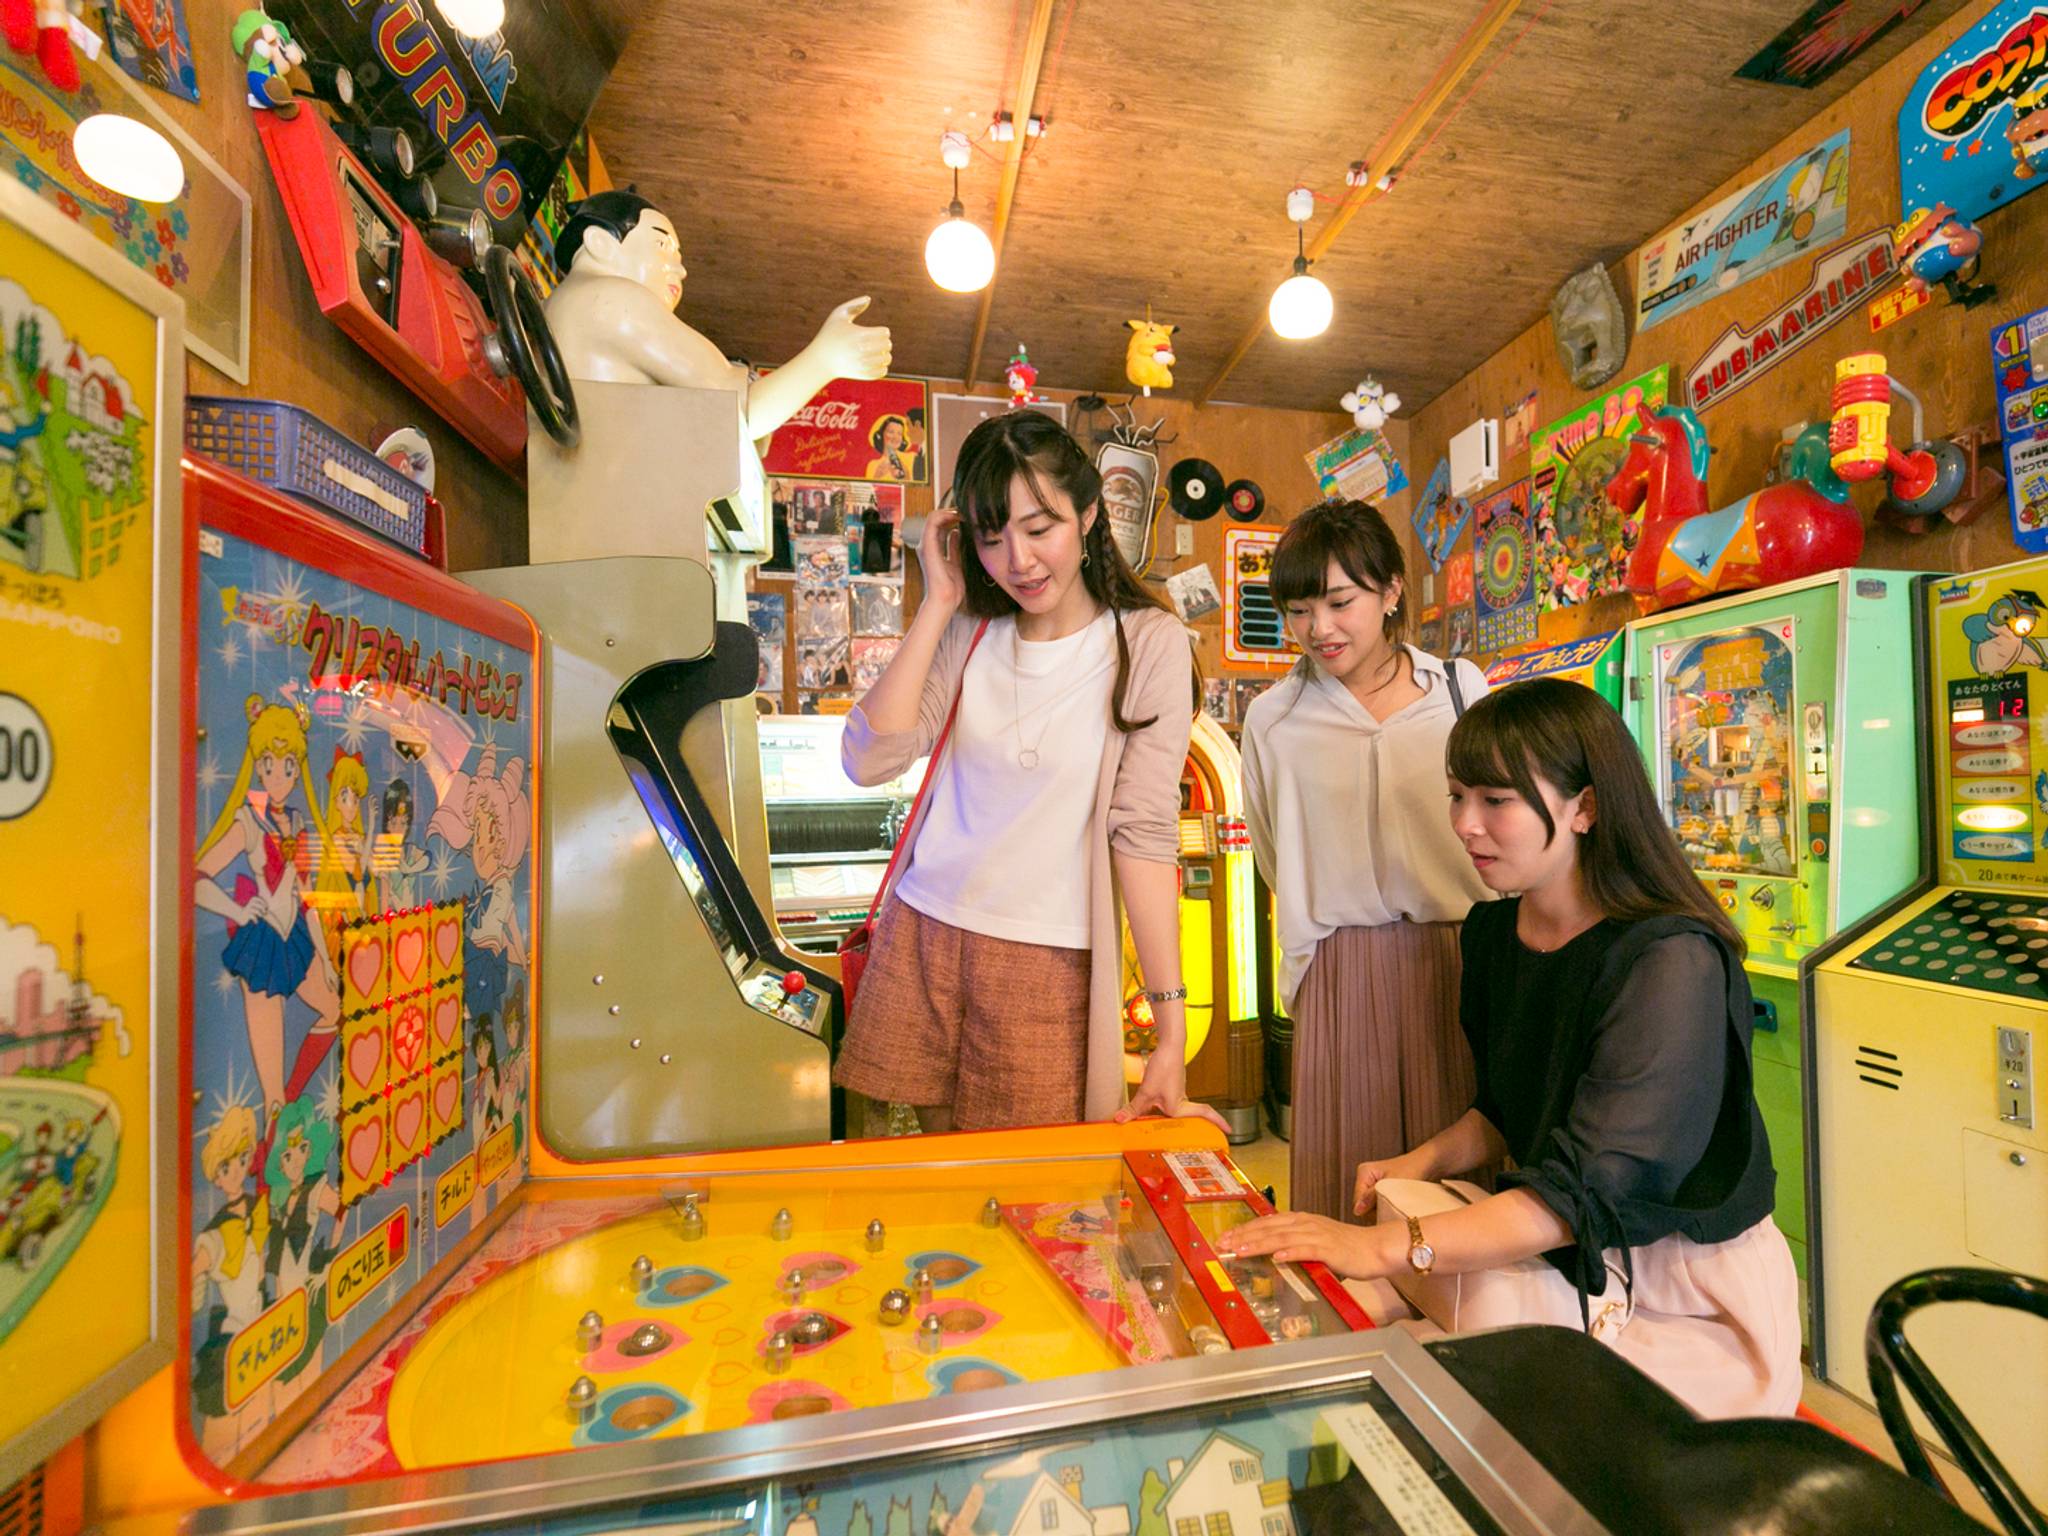 Nostalgia brings people together in Japan